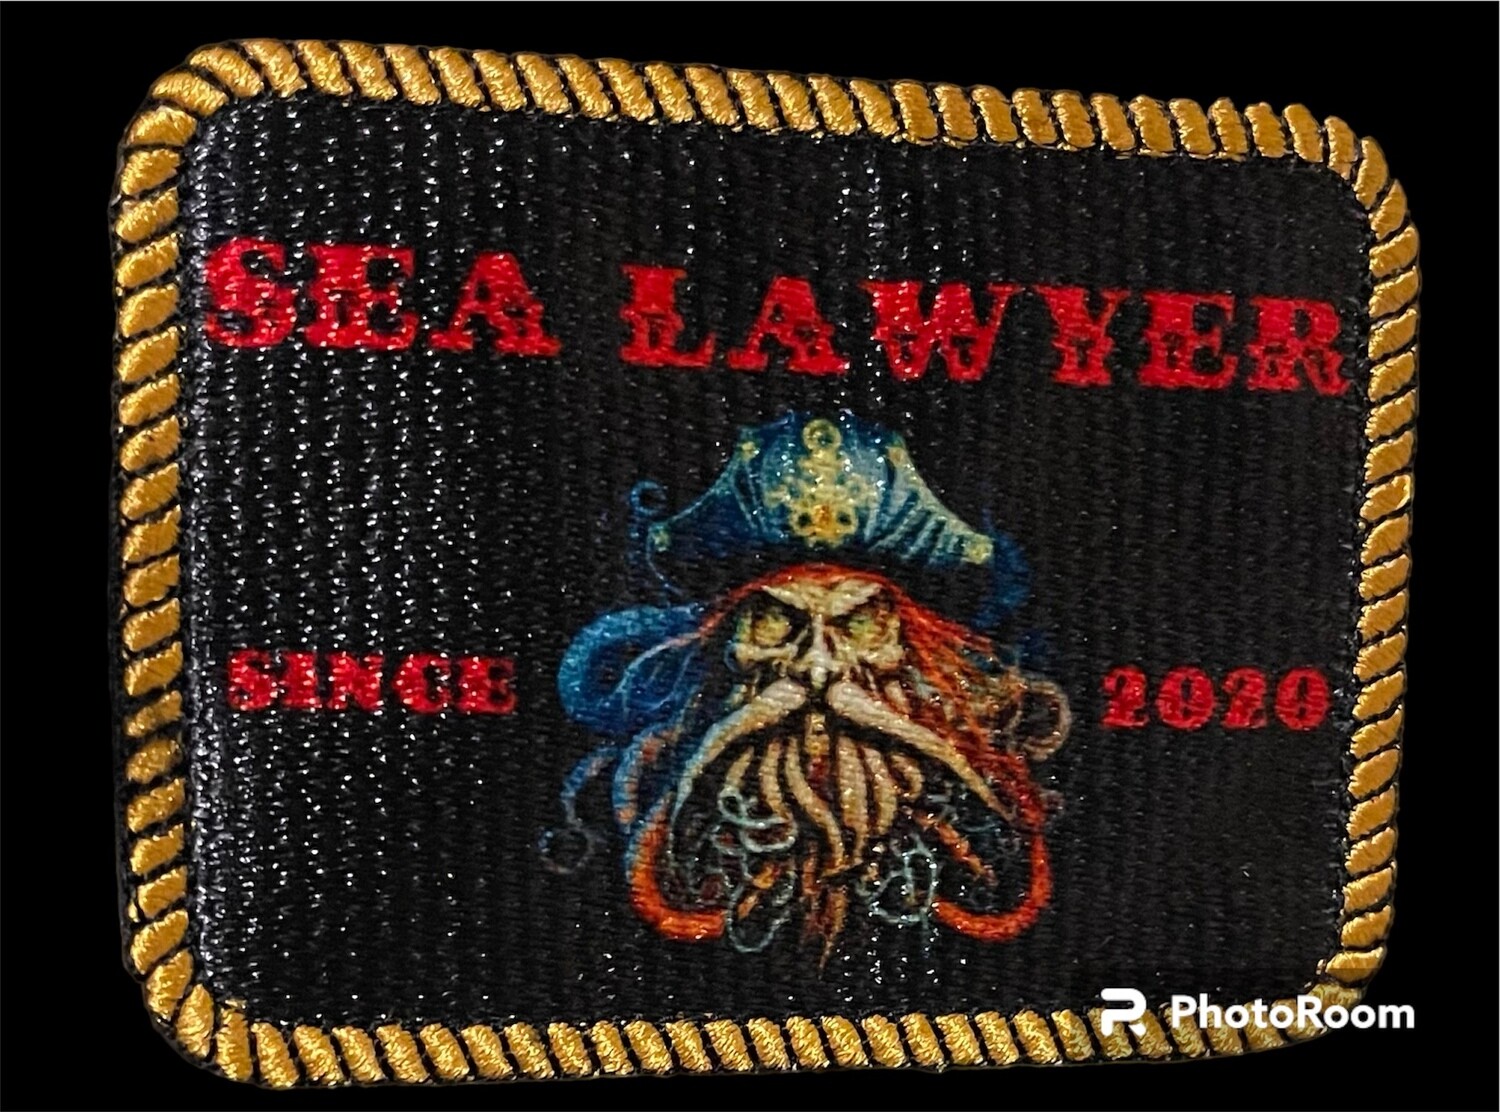 Sea Lawyer Patch